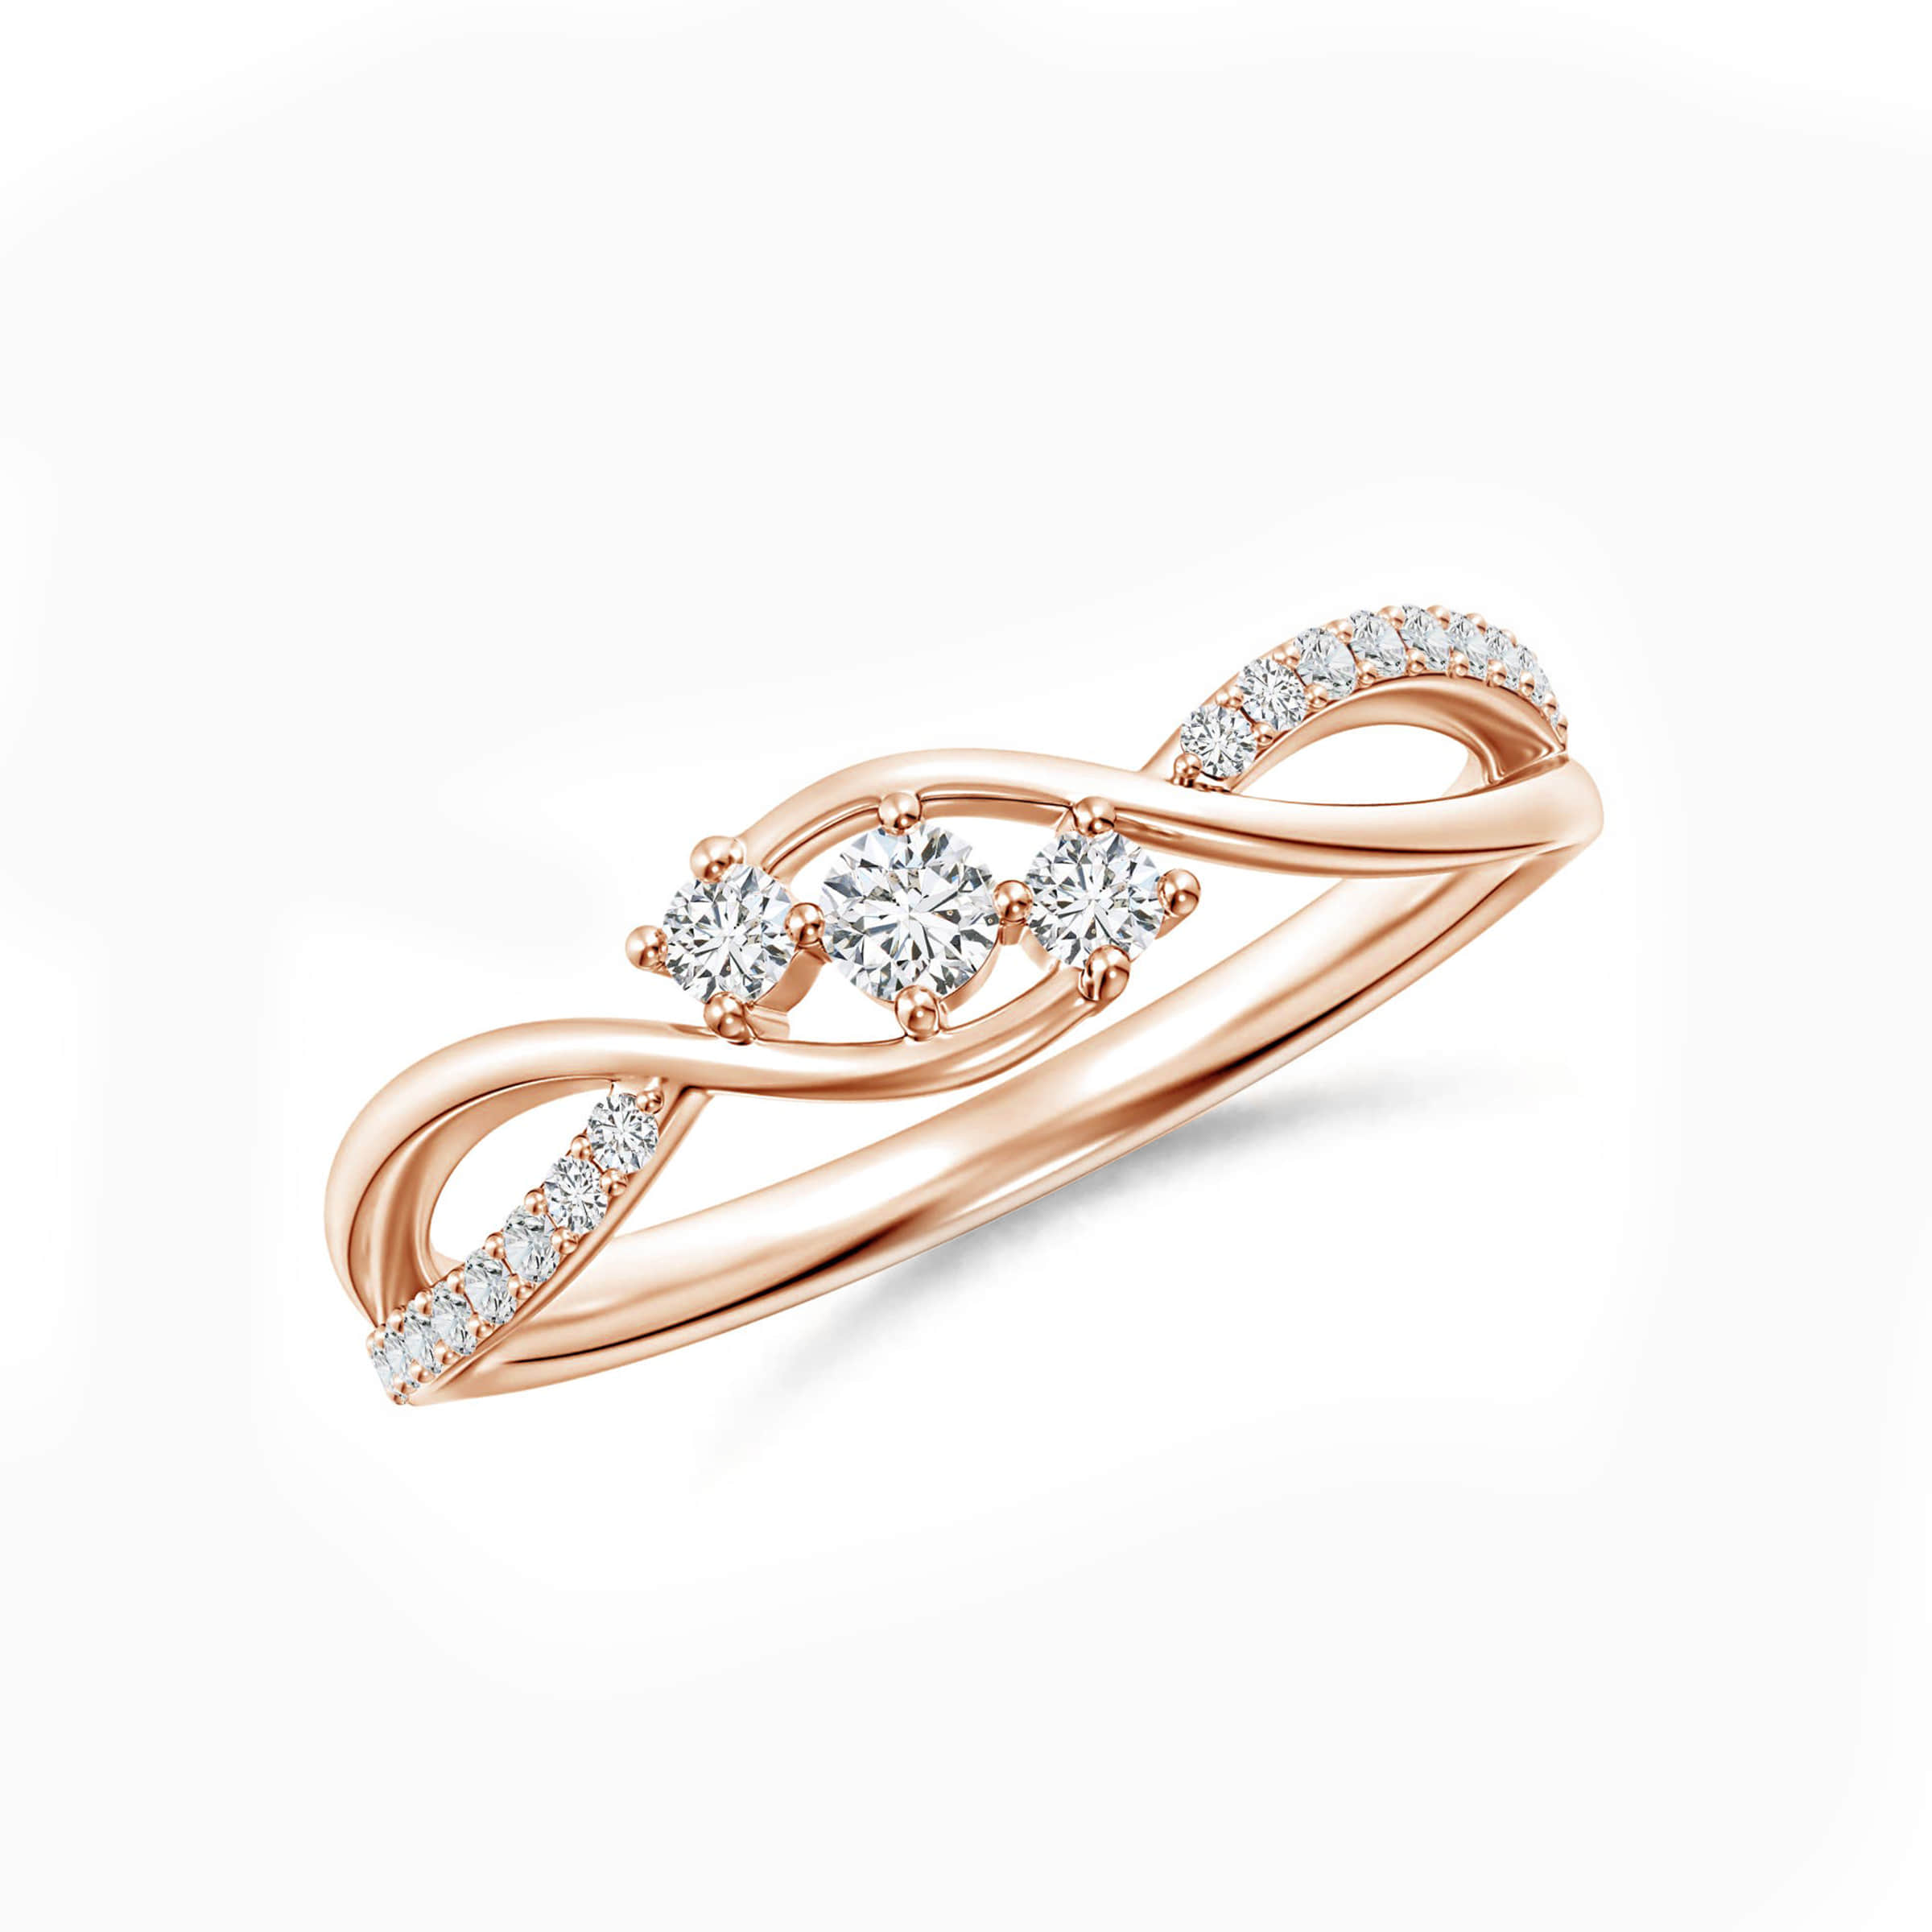 Darry Ring diamond promise ring for her in rose gold